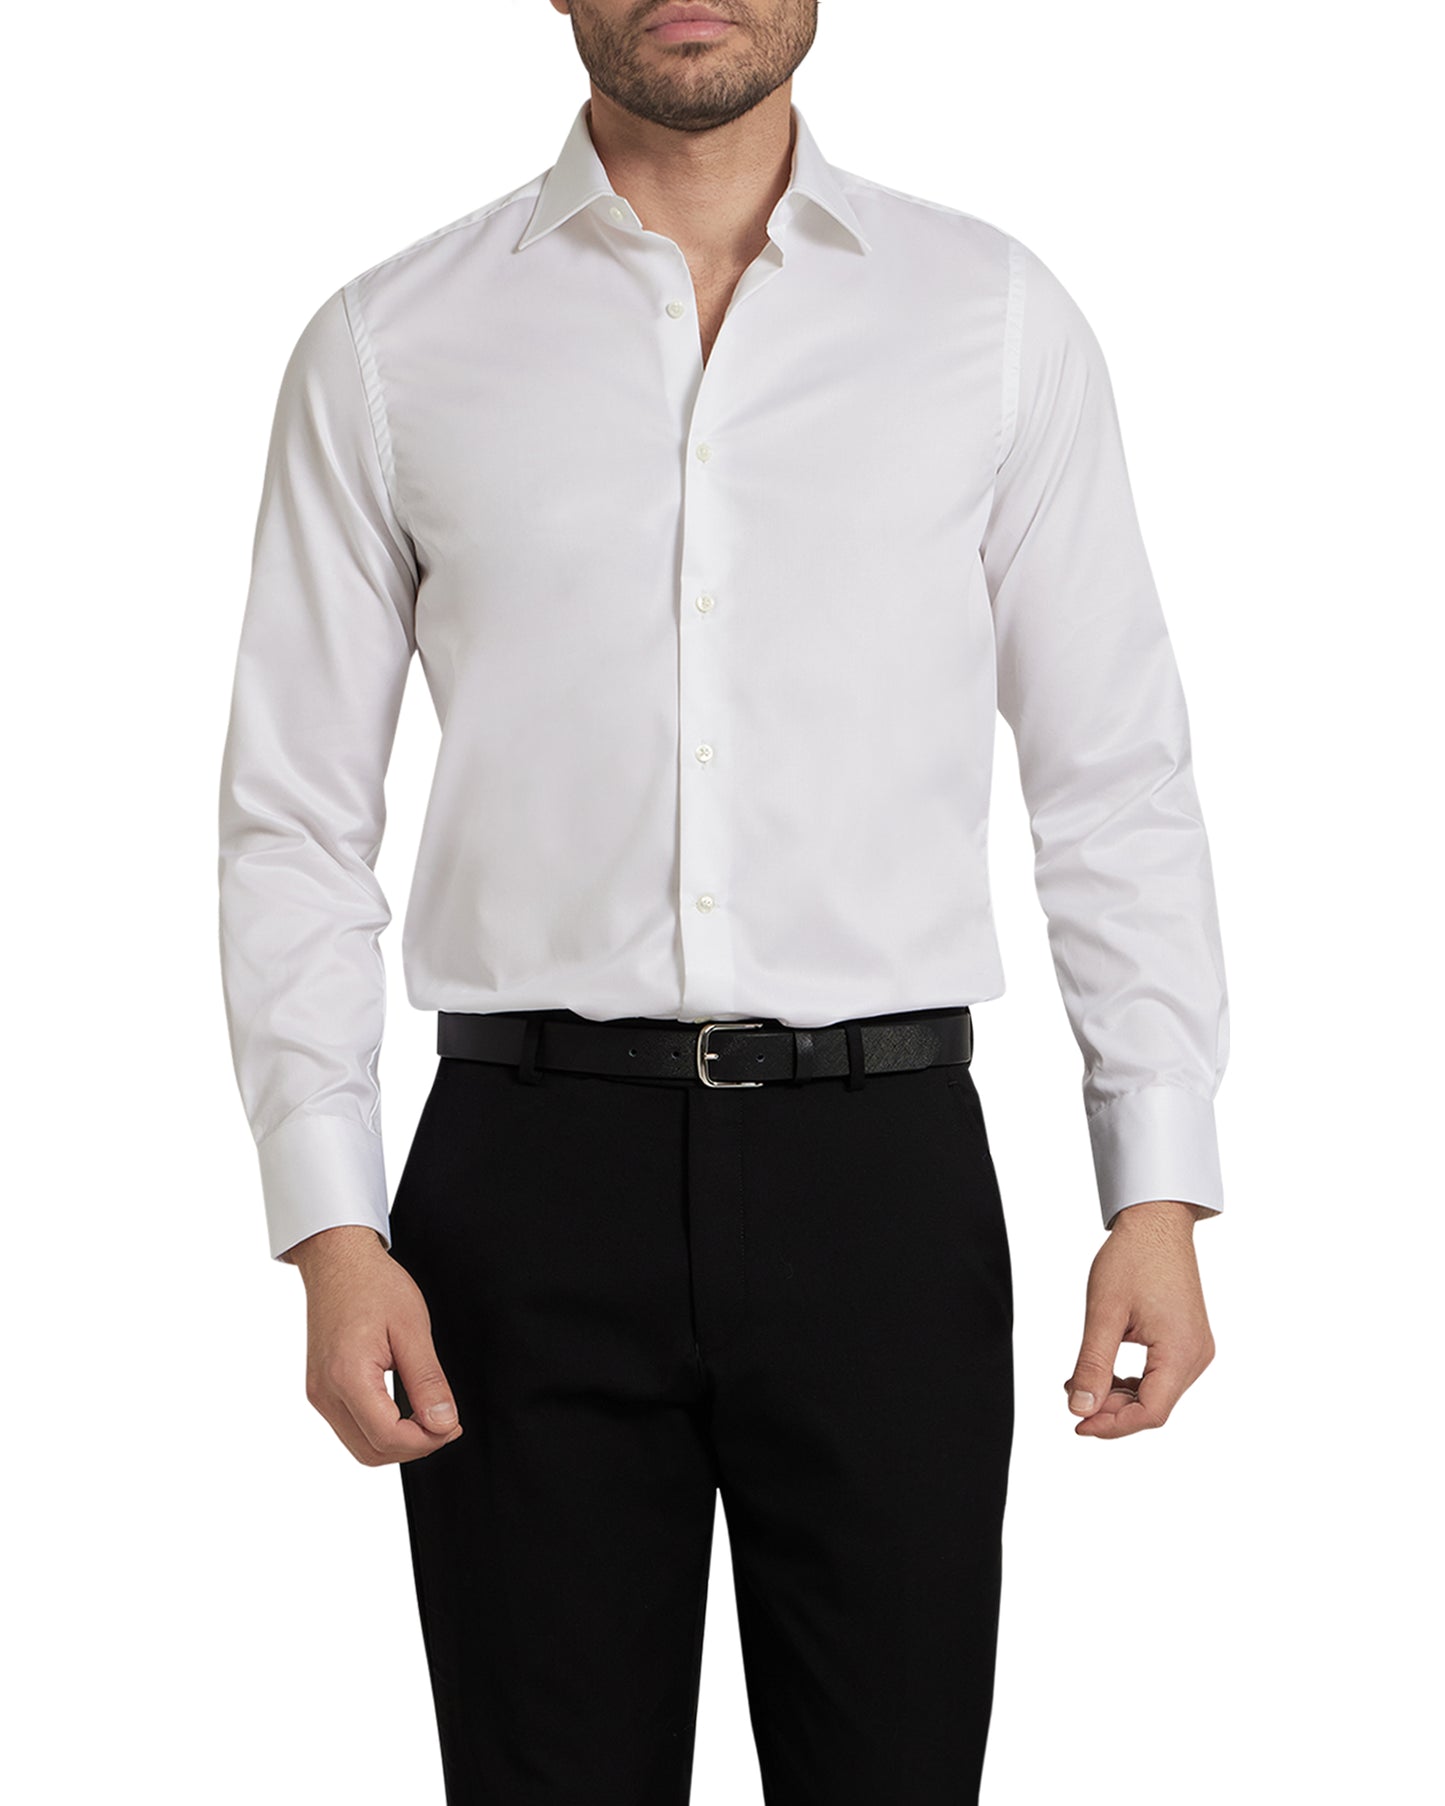 White Twill Natural Stretch Cotton Dress Shirt